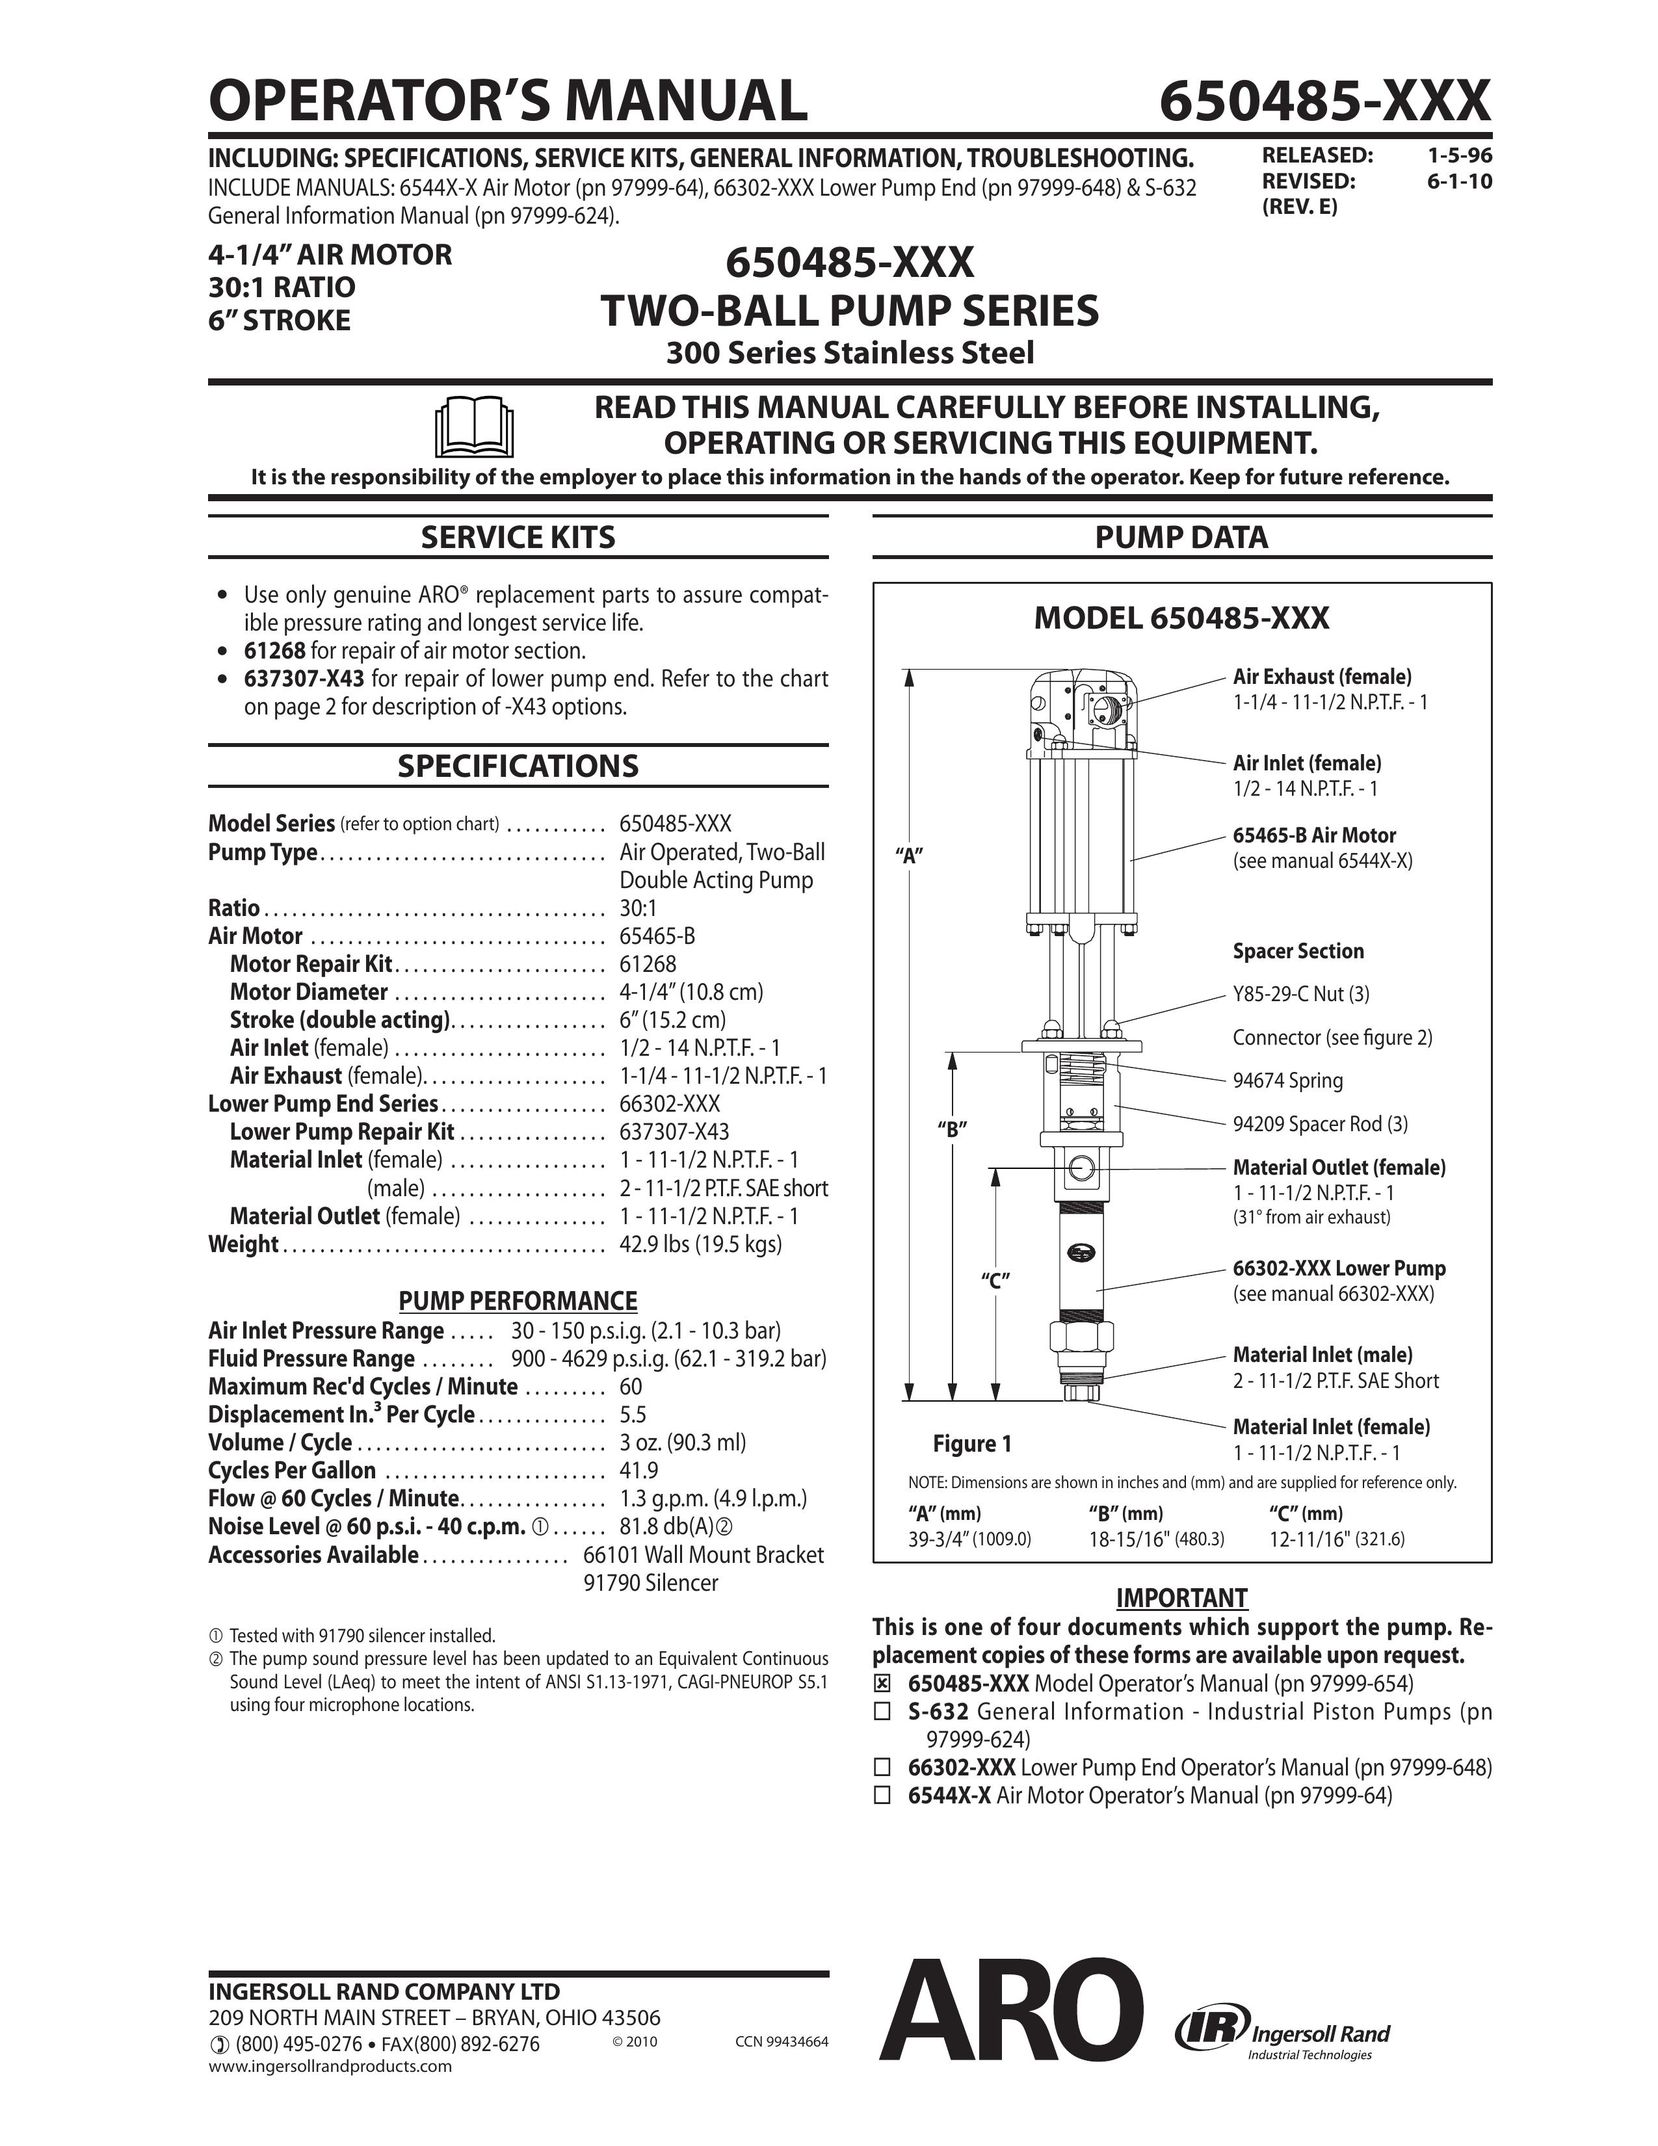 Ingersoll-Rand 650485-XXX Water Pump User Manual